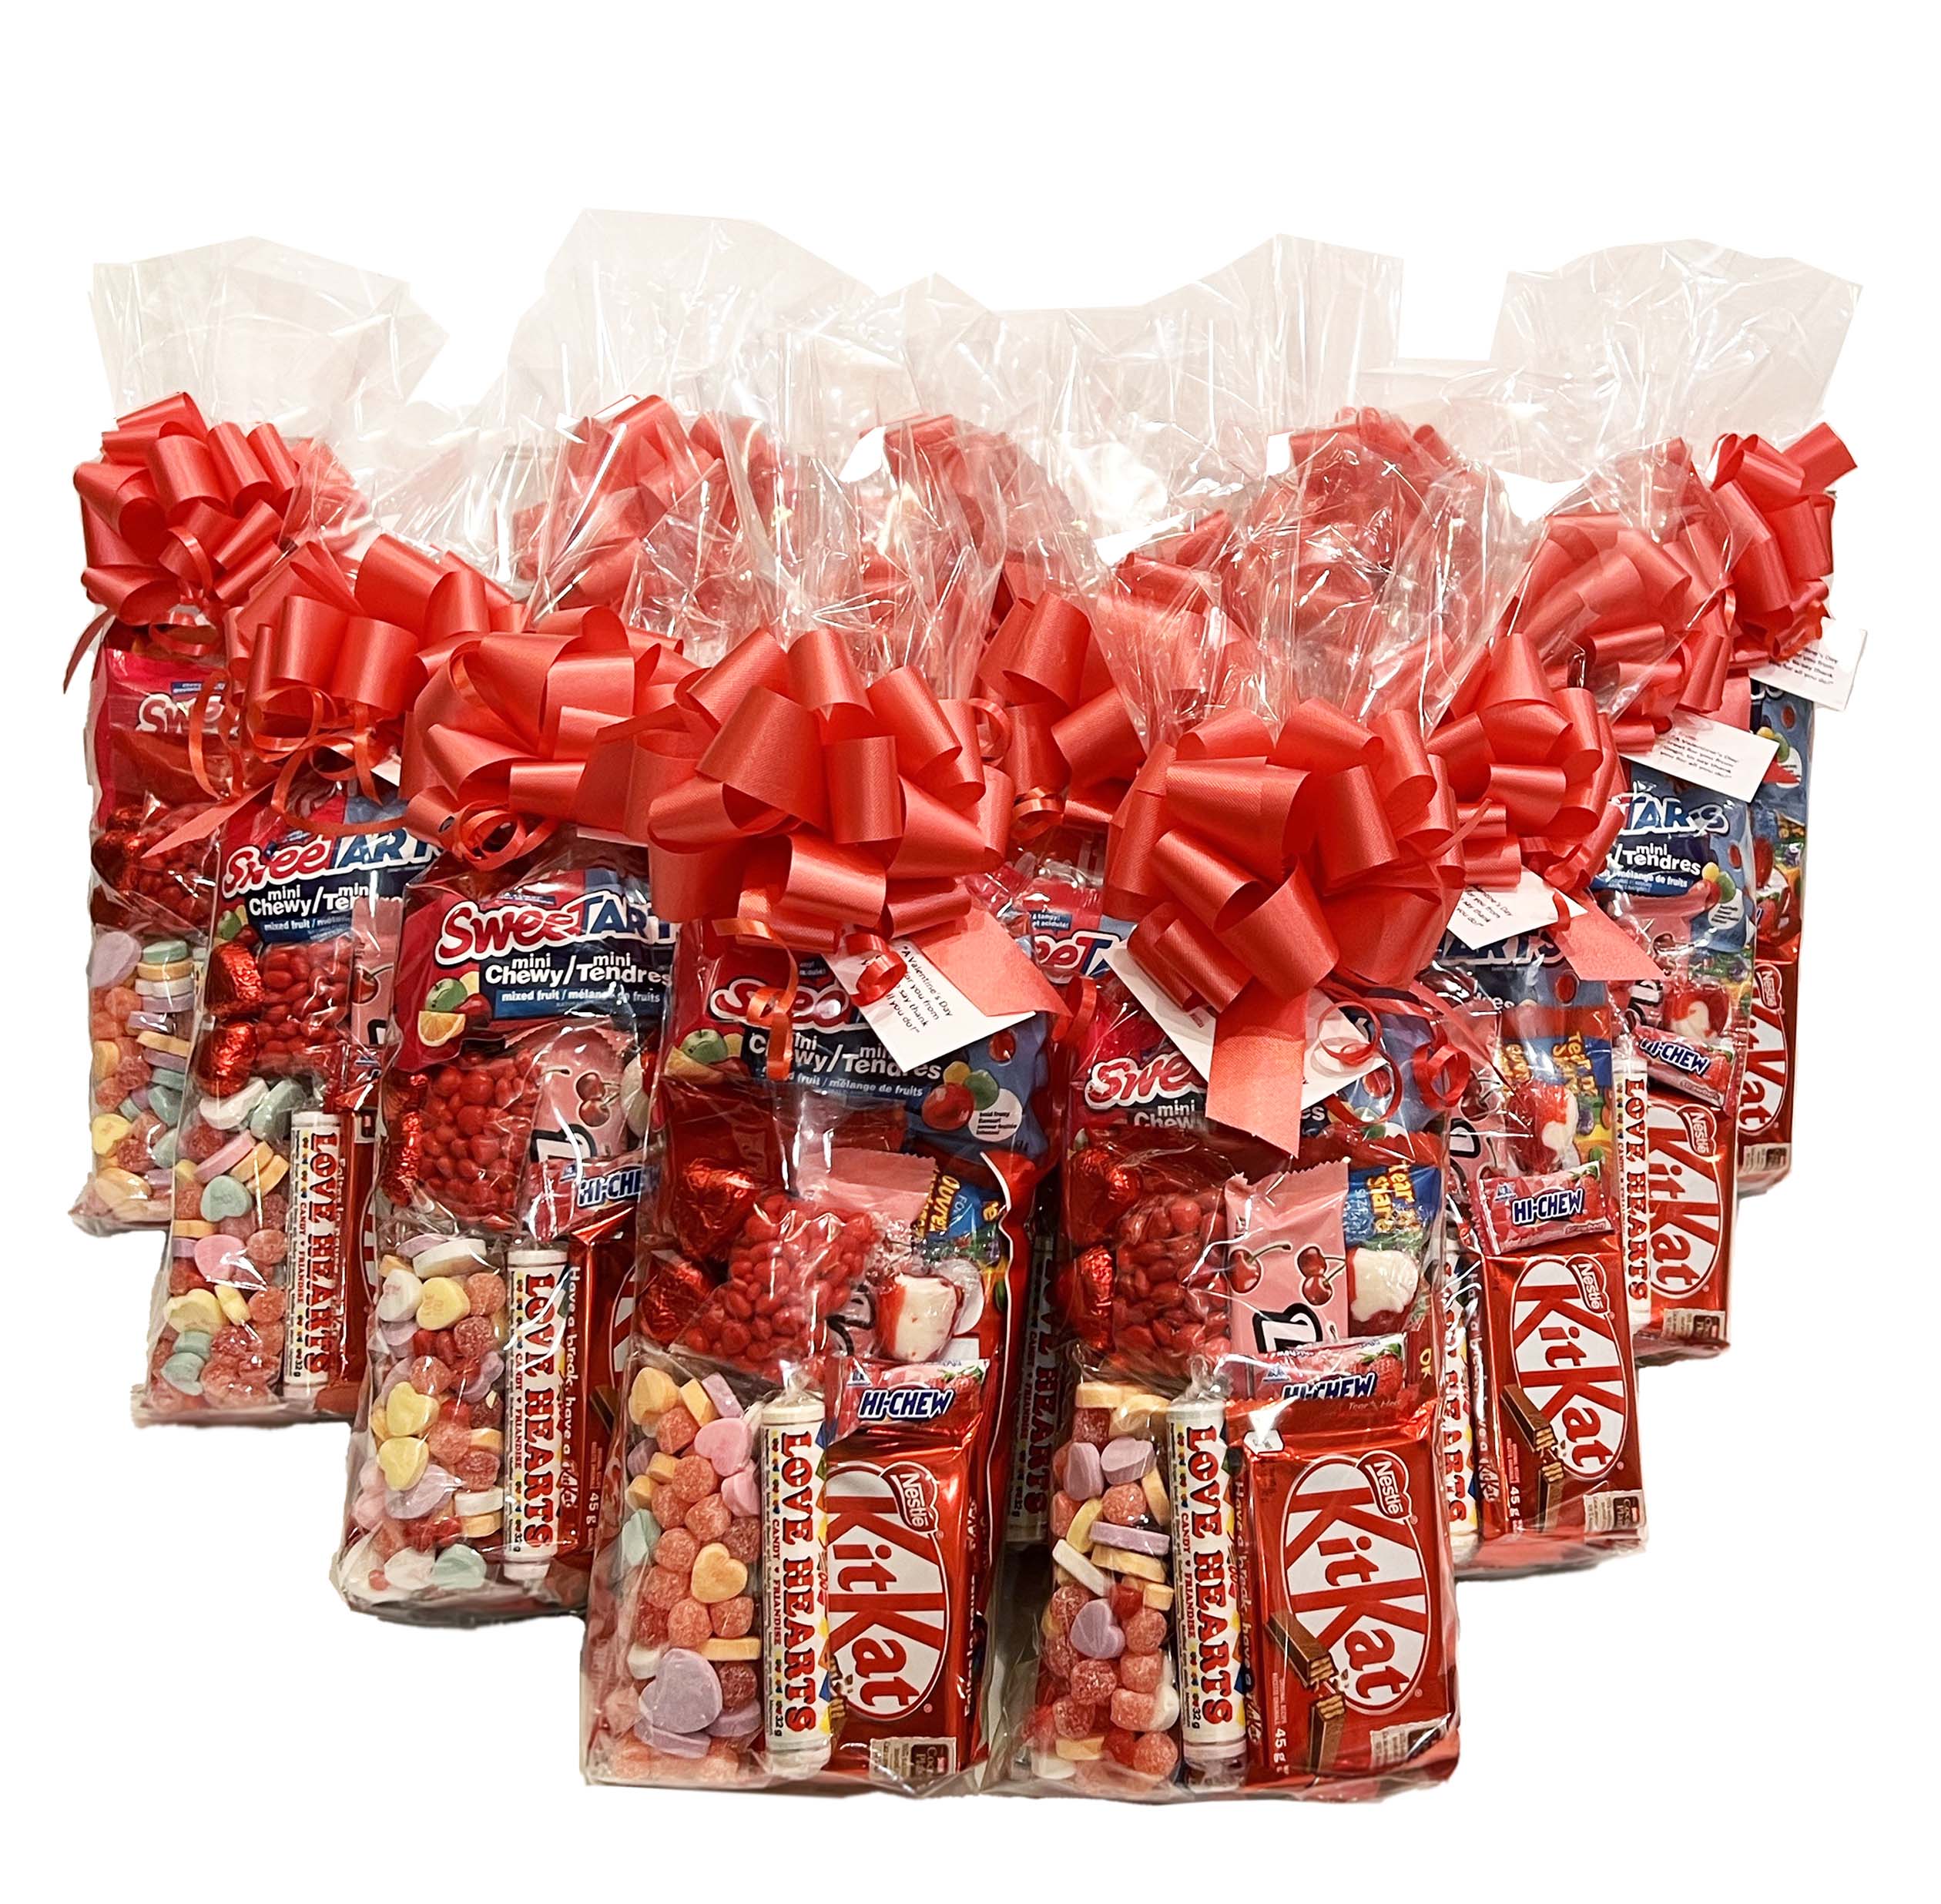 9 Sweet Packaging Ideas for Valentine's Day - Nashville Wraps Blog